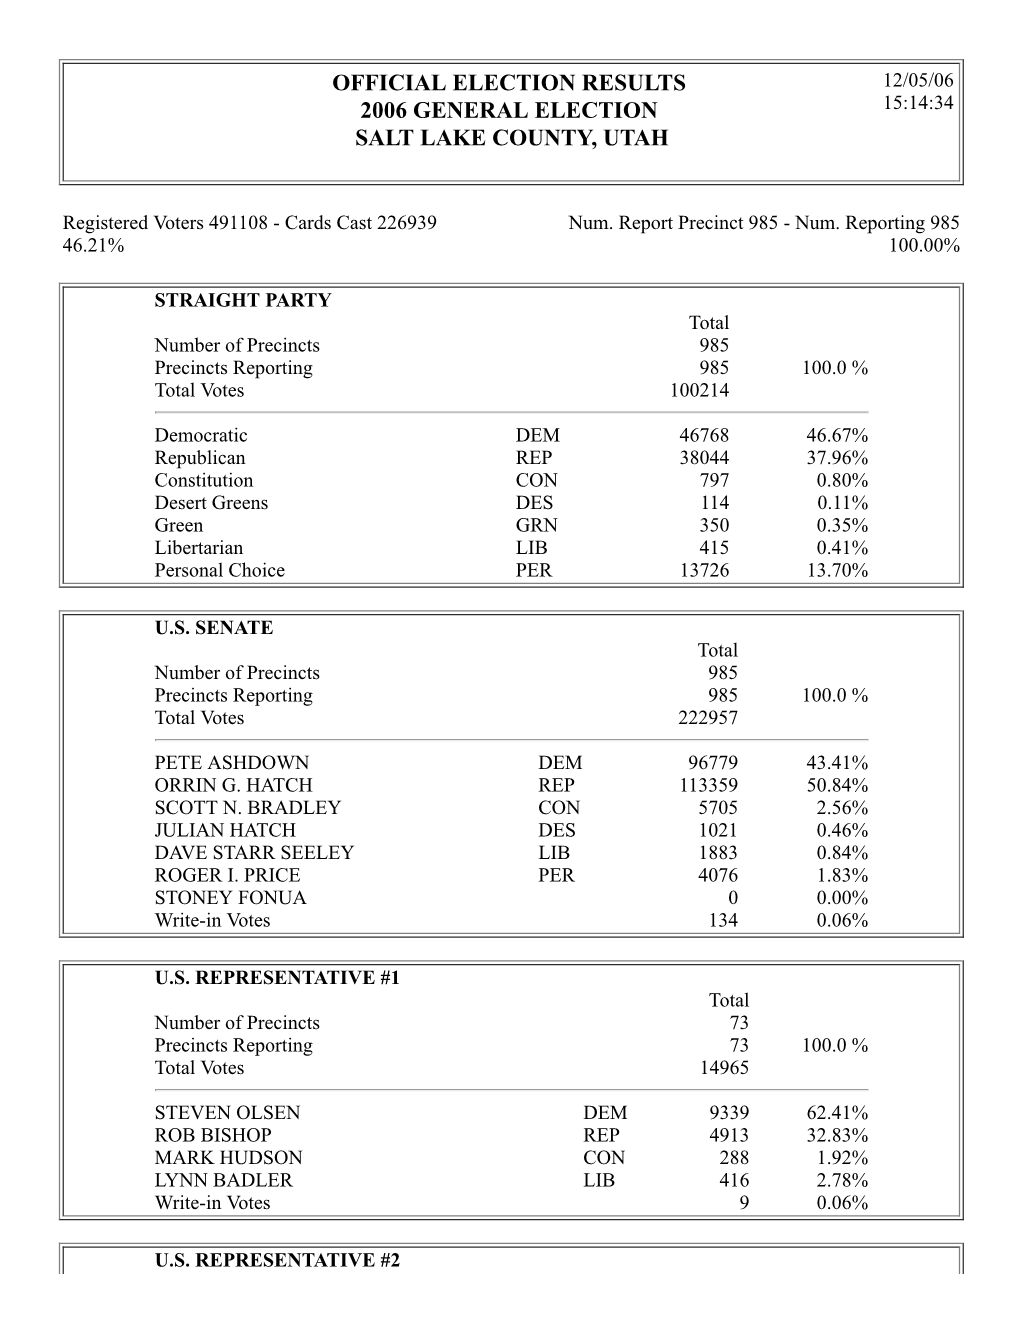 Official Election Results 2006 General Election Salt Lake